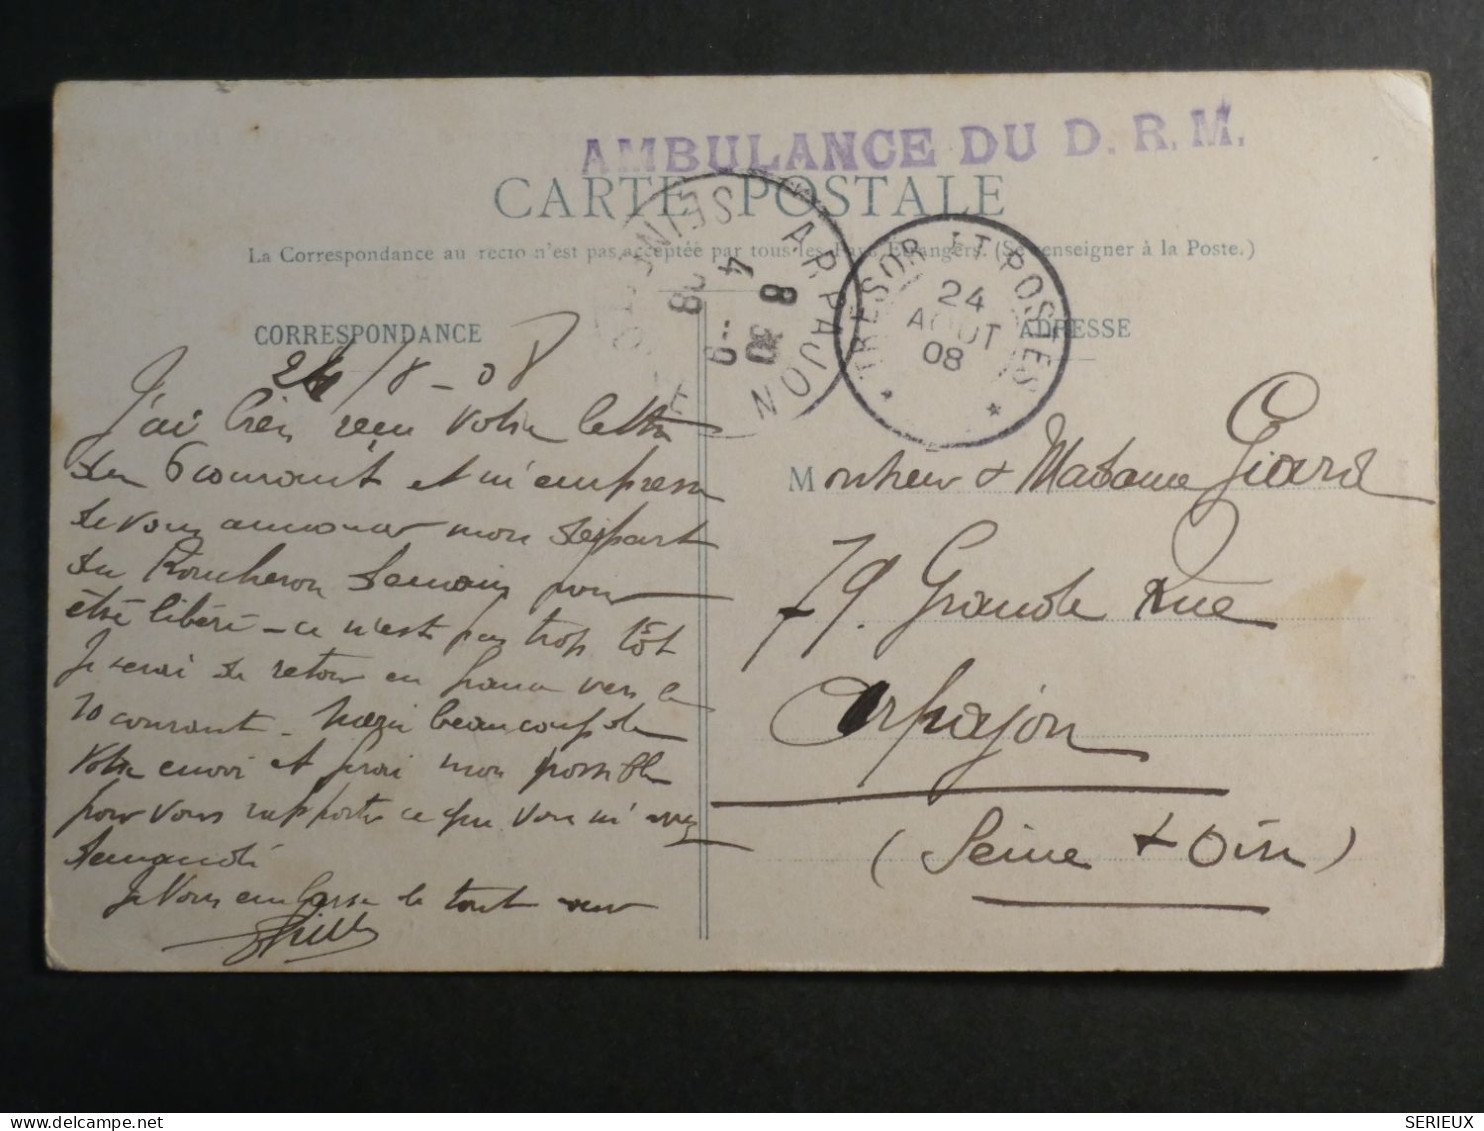 DM 9  CAMPAGNE DU MAROC  BELLE CARTE   RARE 1908 CORPS DE DEBARQUEMENT DE CASA +AFF. INTERESSANT+++ - Briefe U. Dokumente